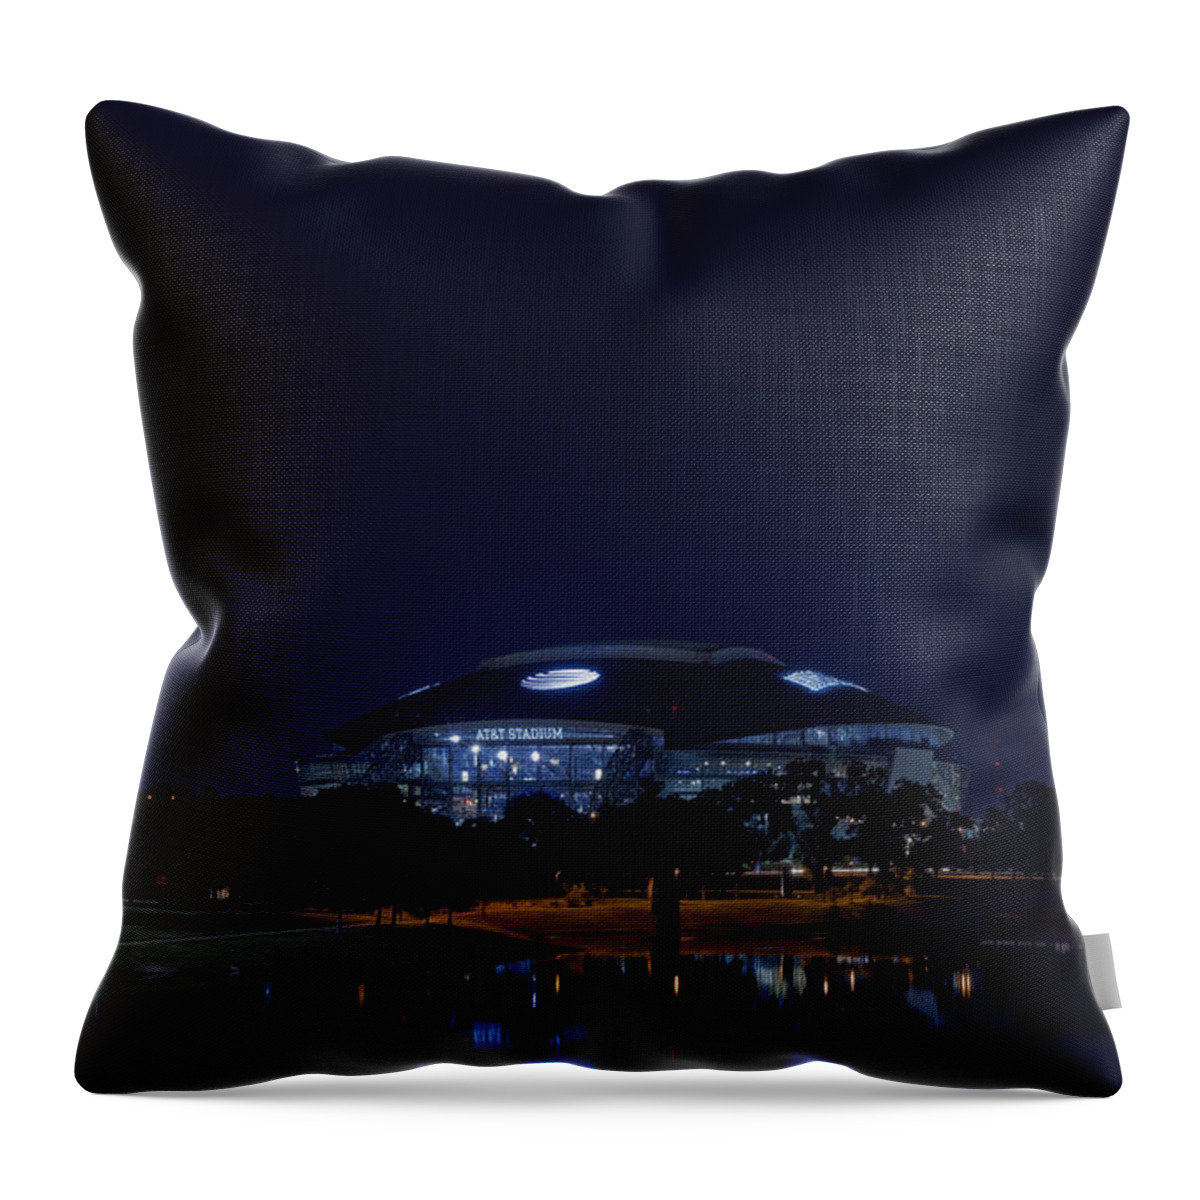 Dallas Cowboys Throw Pillow featuring the photograph Cowboys Stadium Game Night 2 #1 by Jonathan Davison